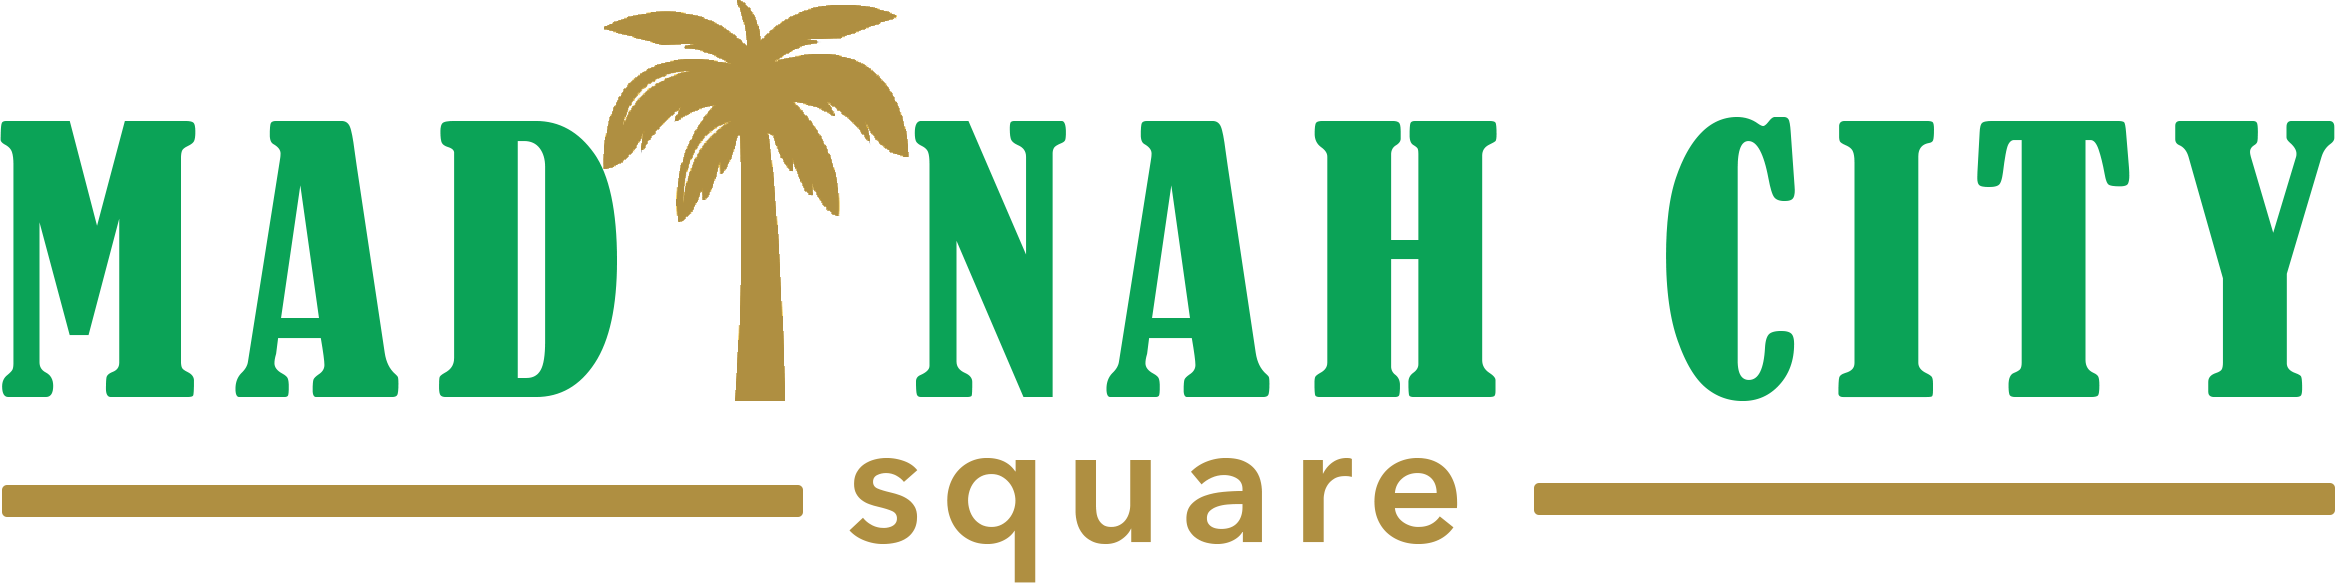 logo madinah city square